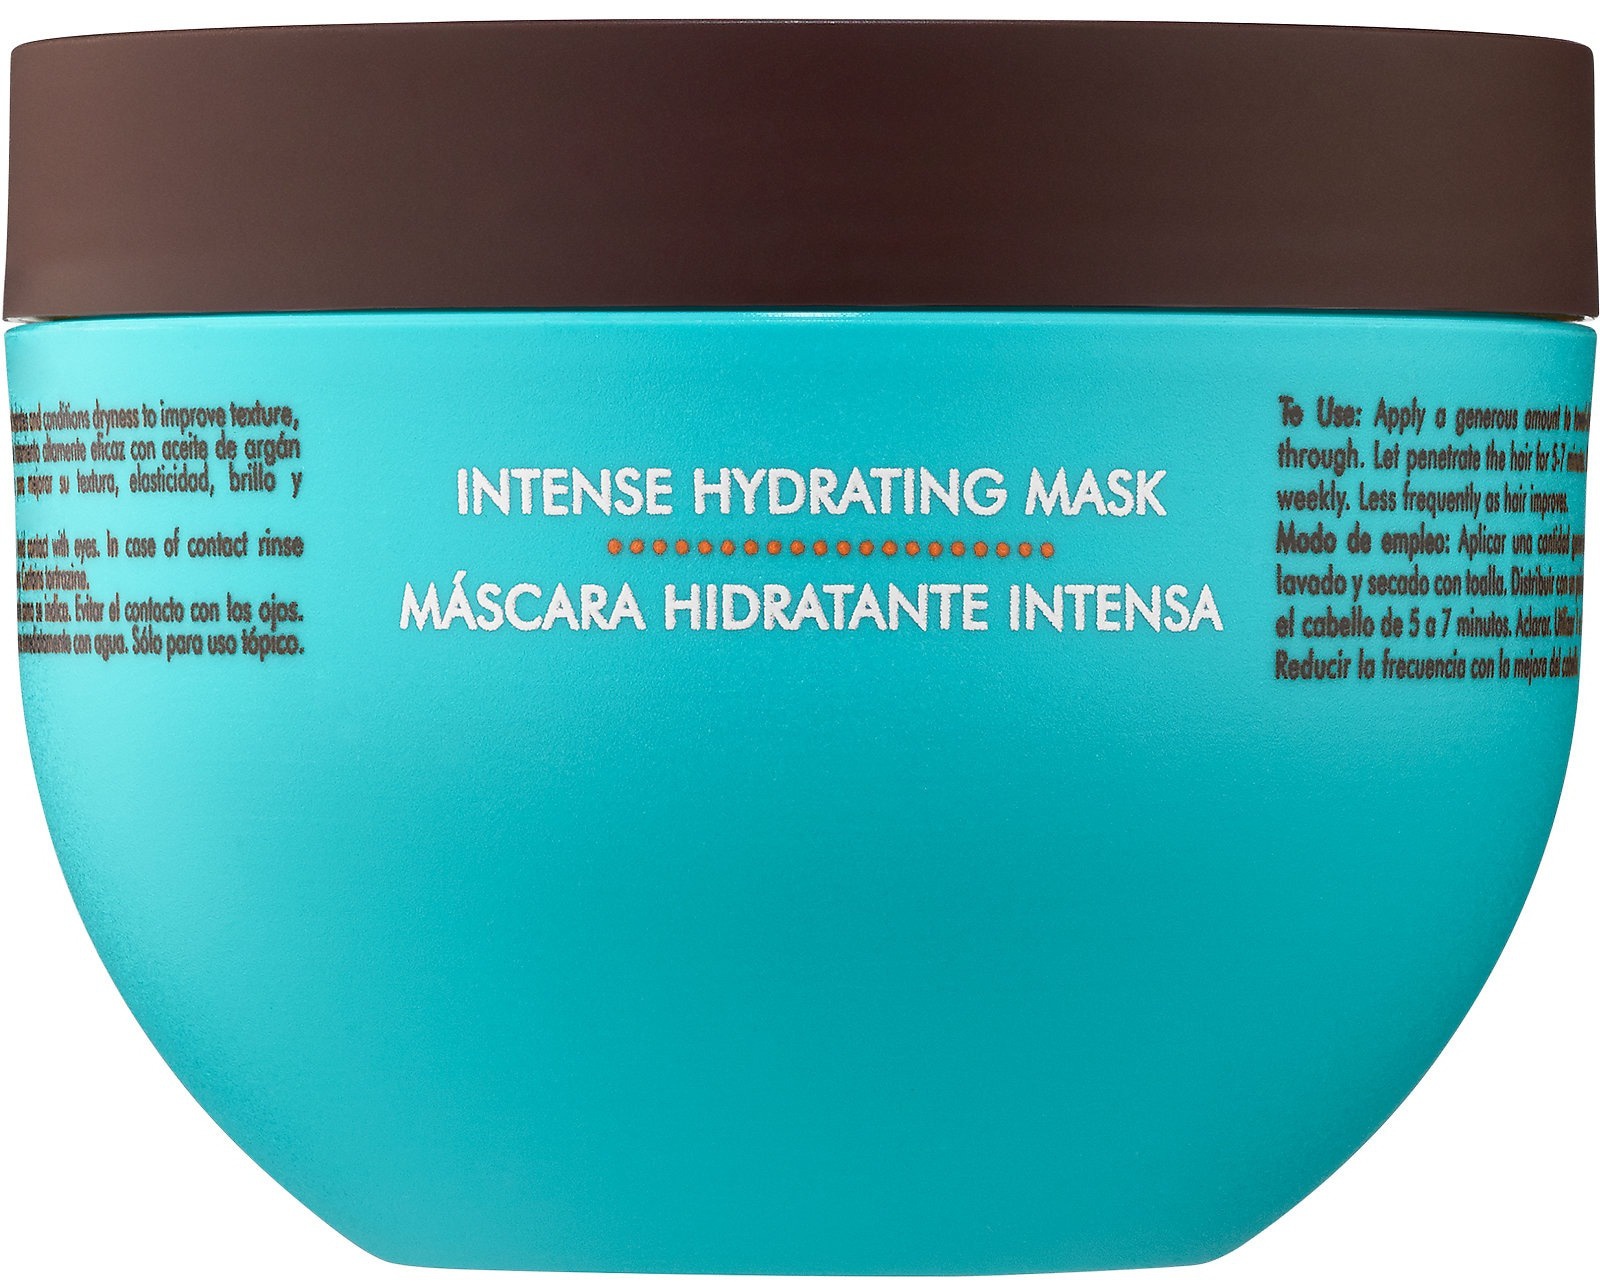 Moroccanoil Hydration Mask